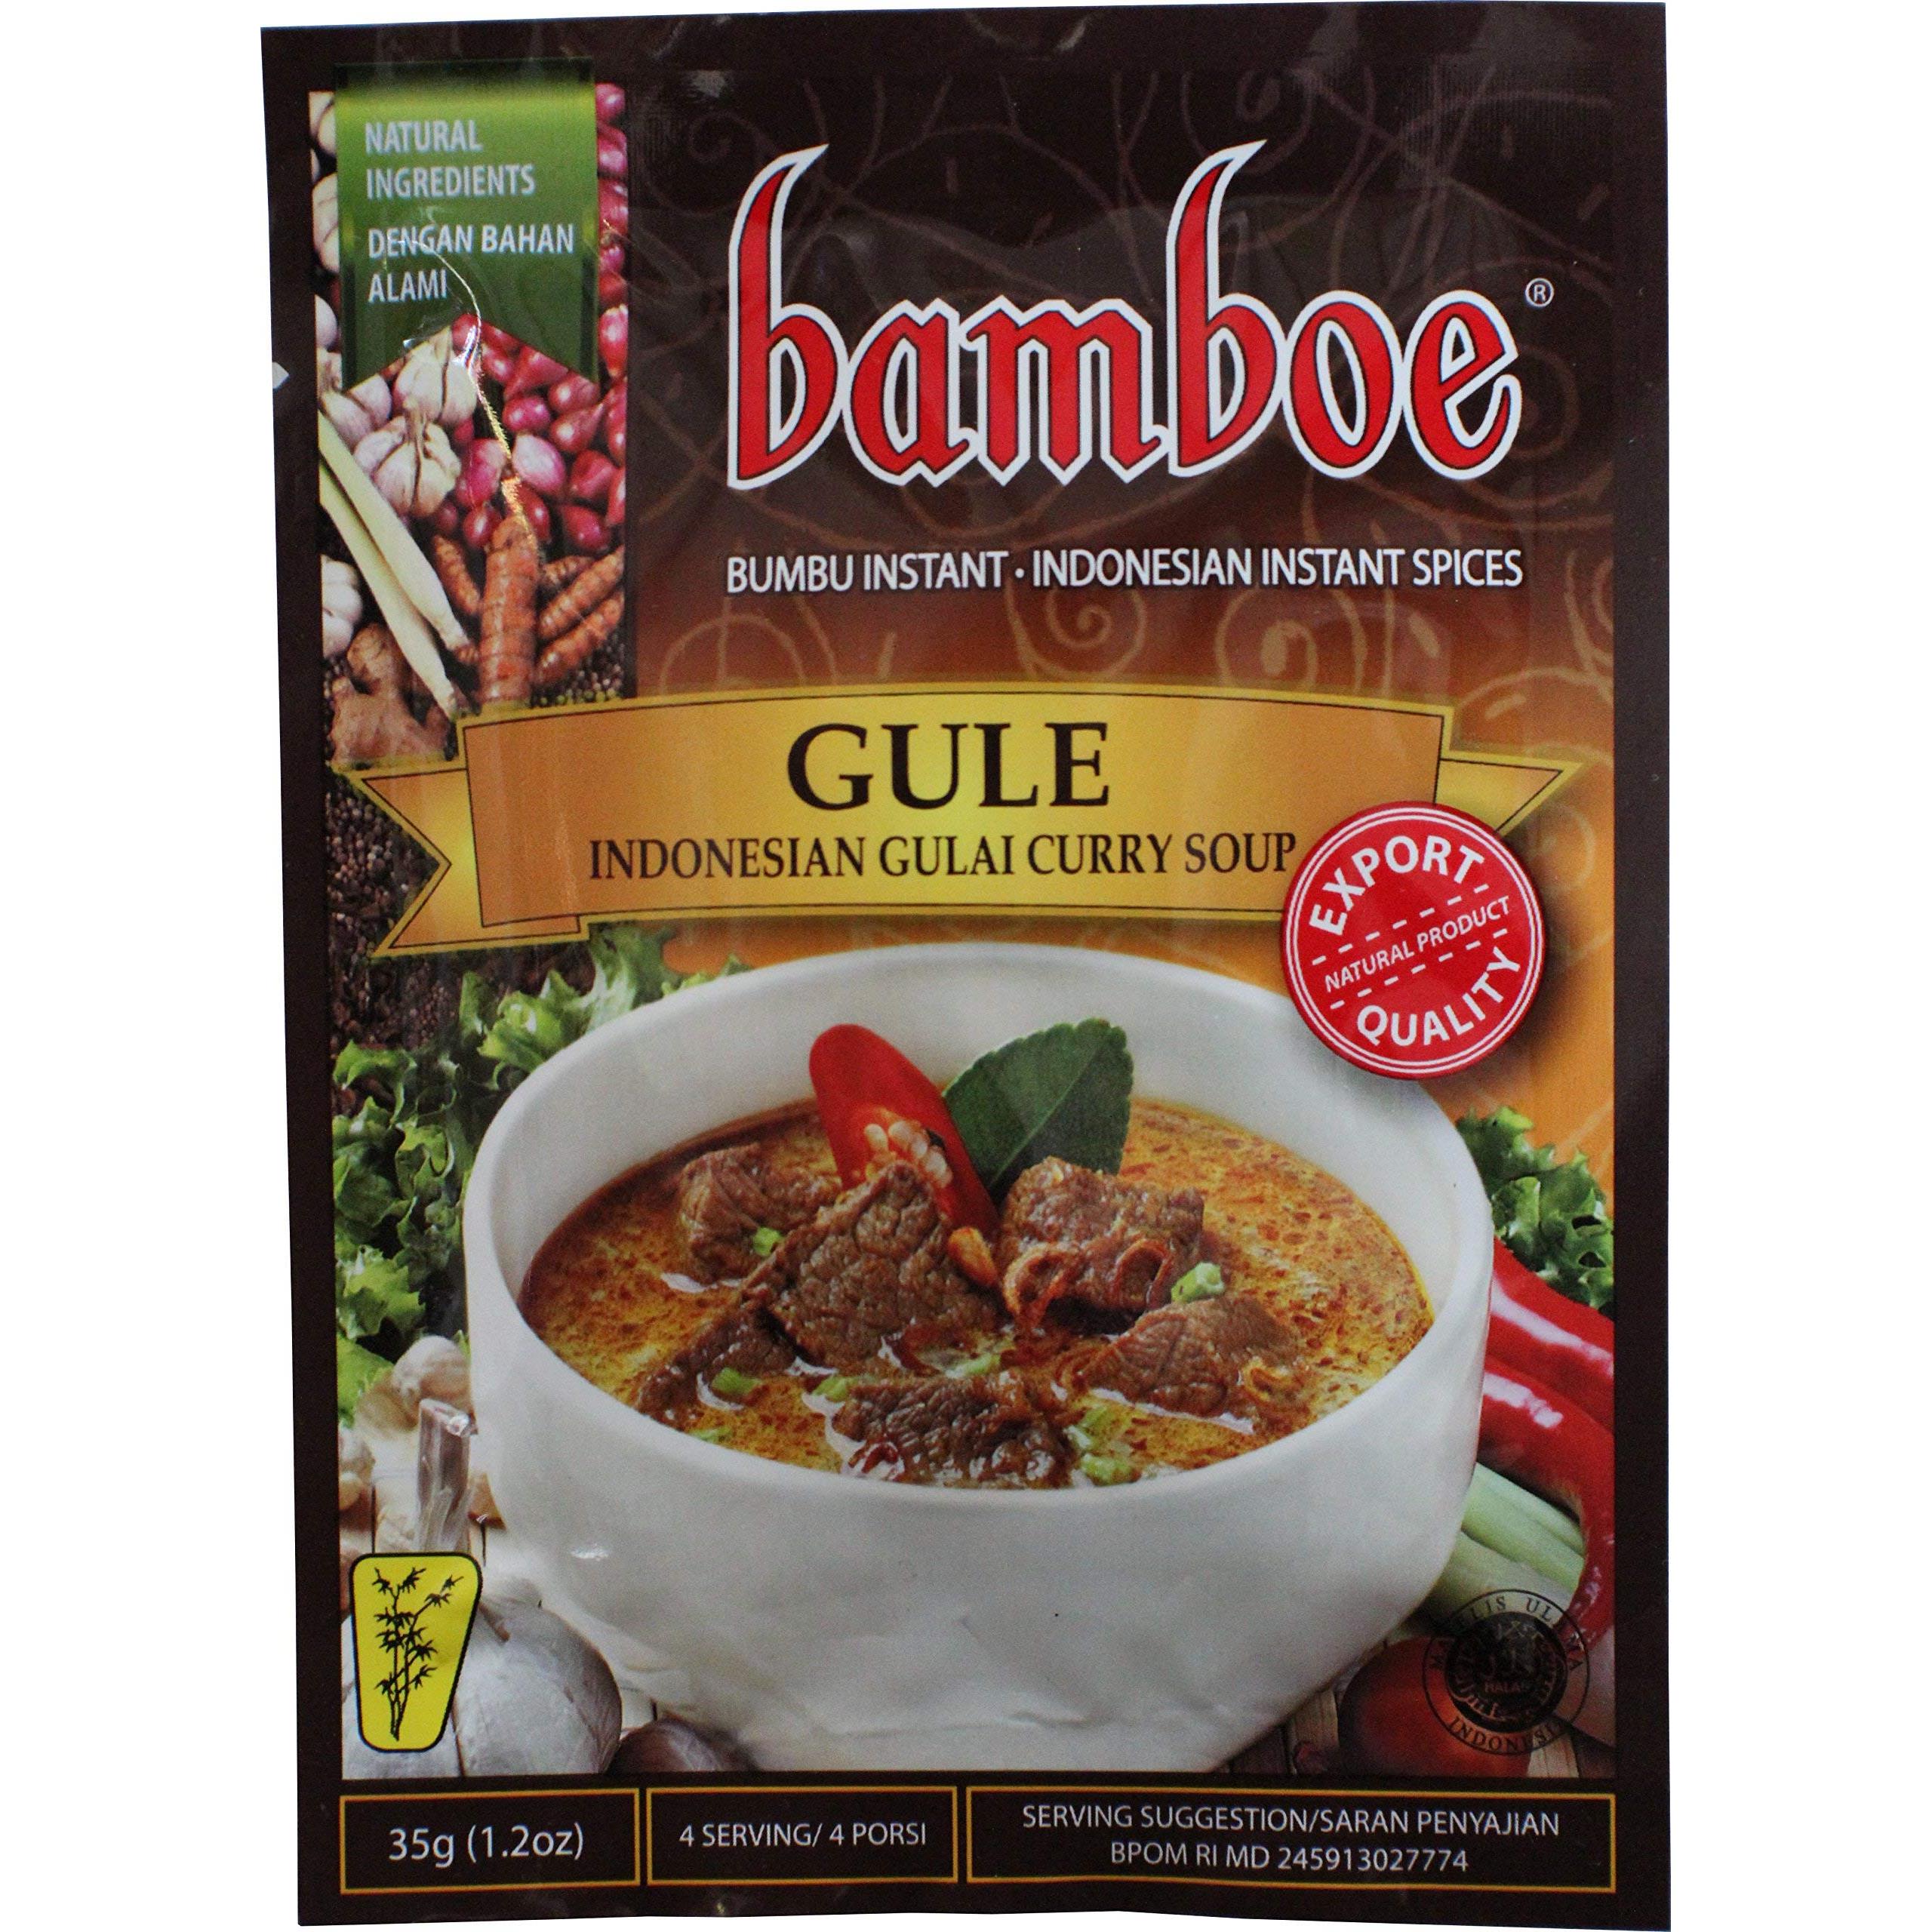 Bamboe Bumbu Instant Gule - Indonesian Gulai Curry soup , 35 Gram (Pack of 3)